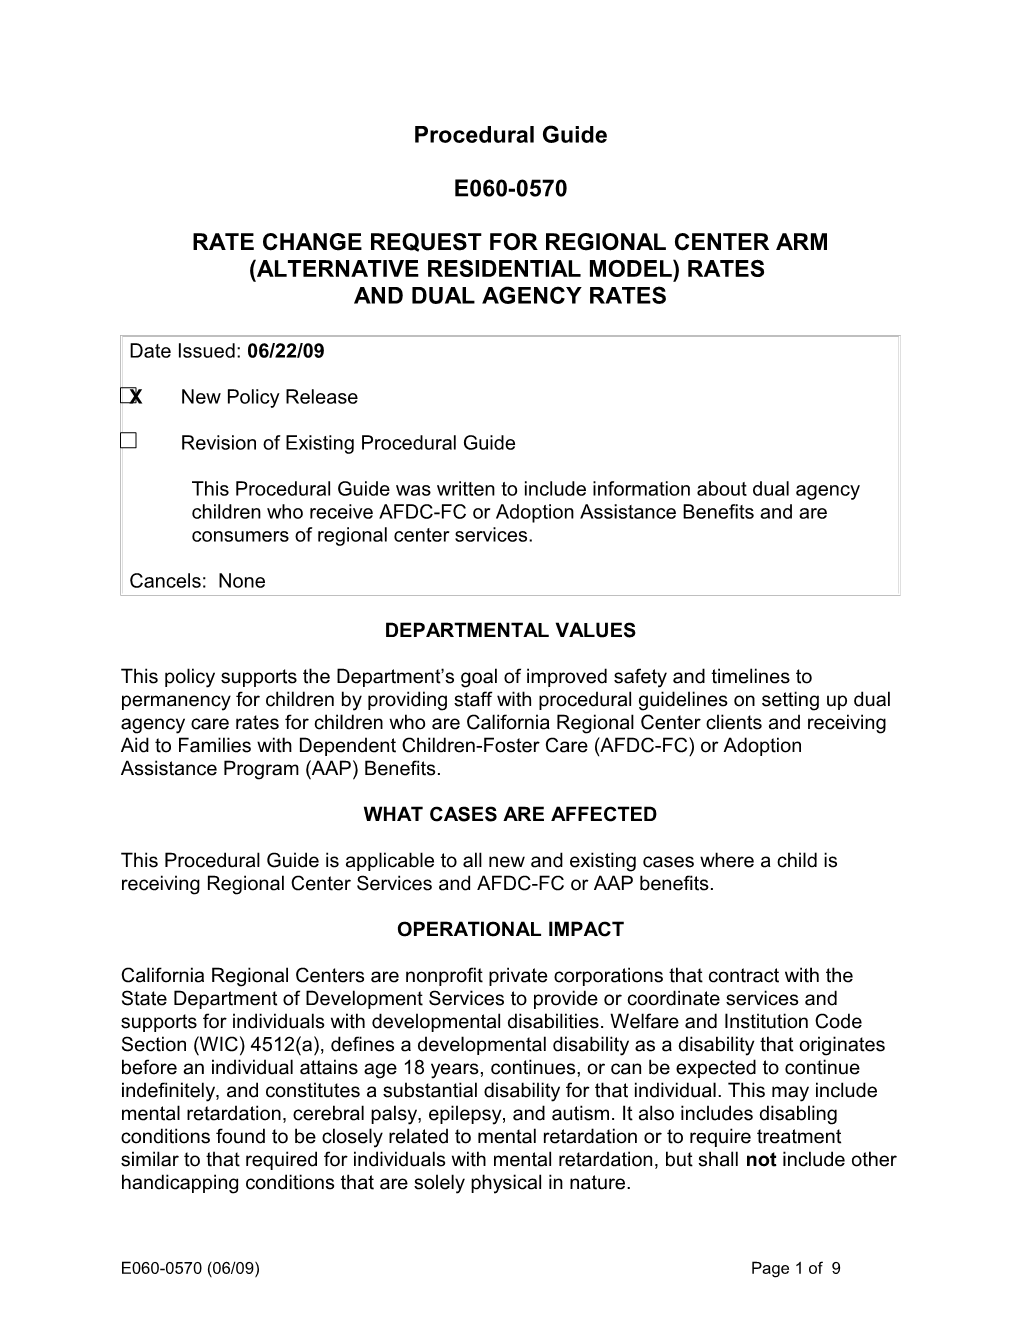 E066-0570, Regional Center Rates for Duaal Agenct